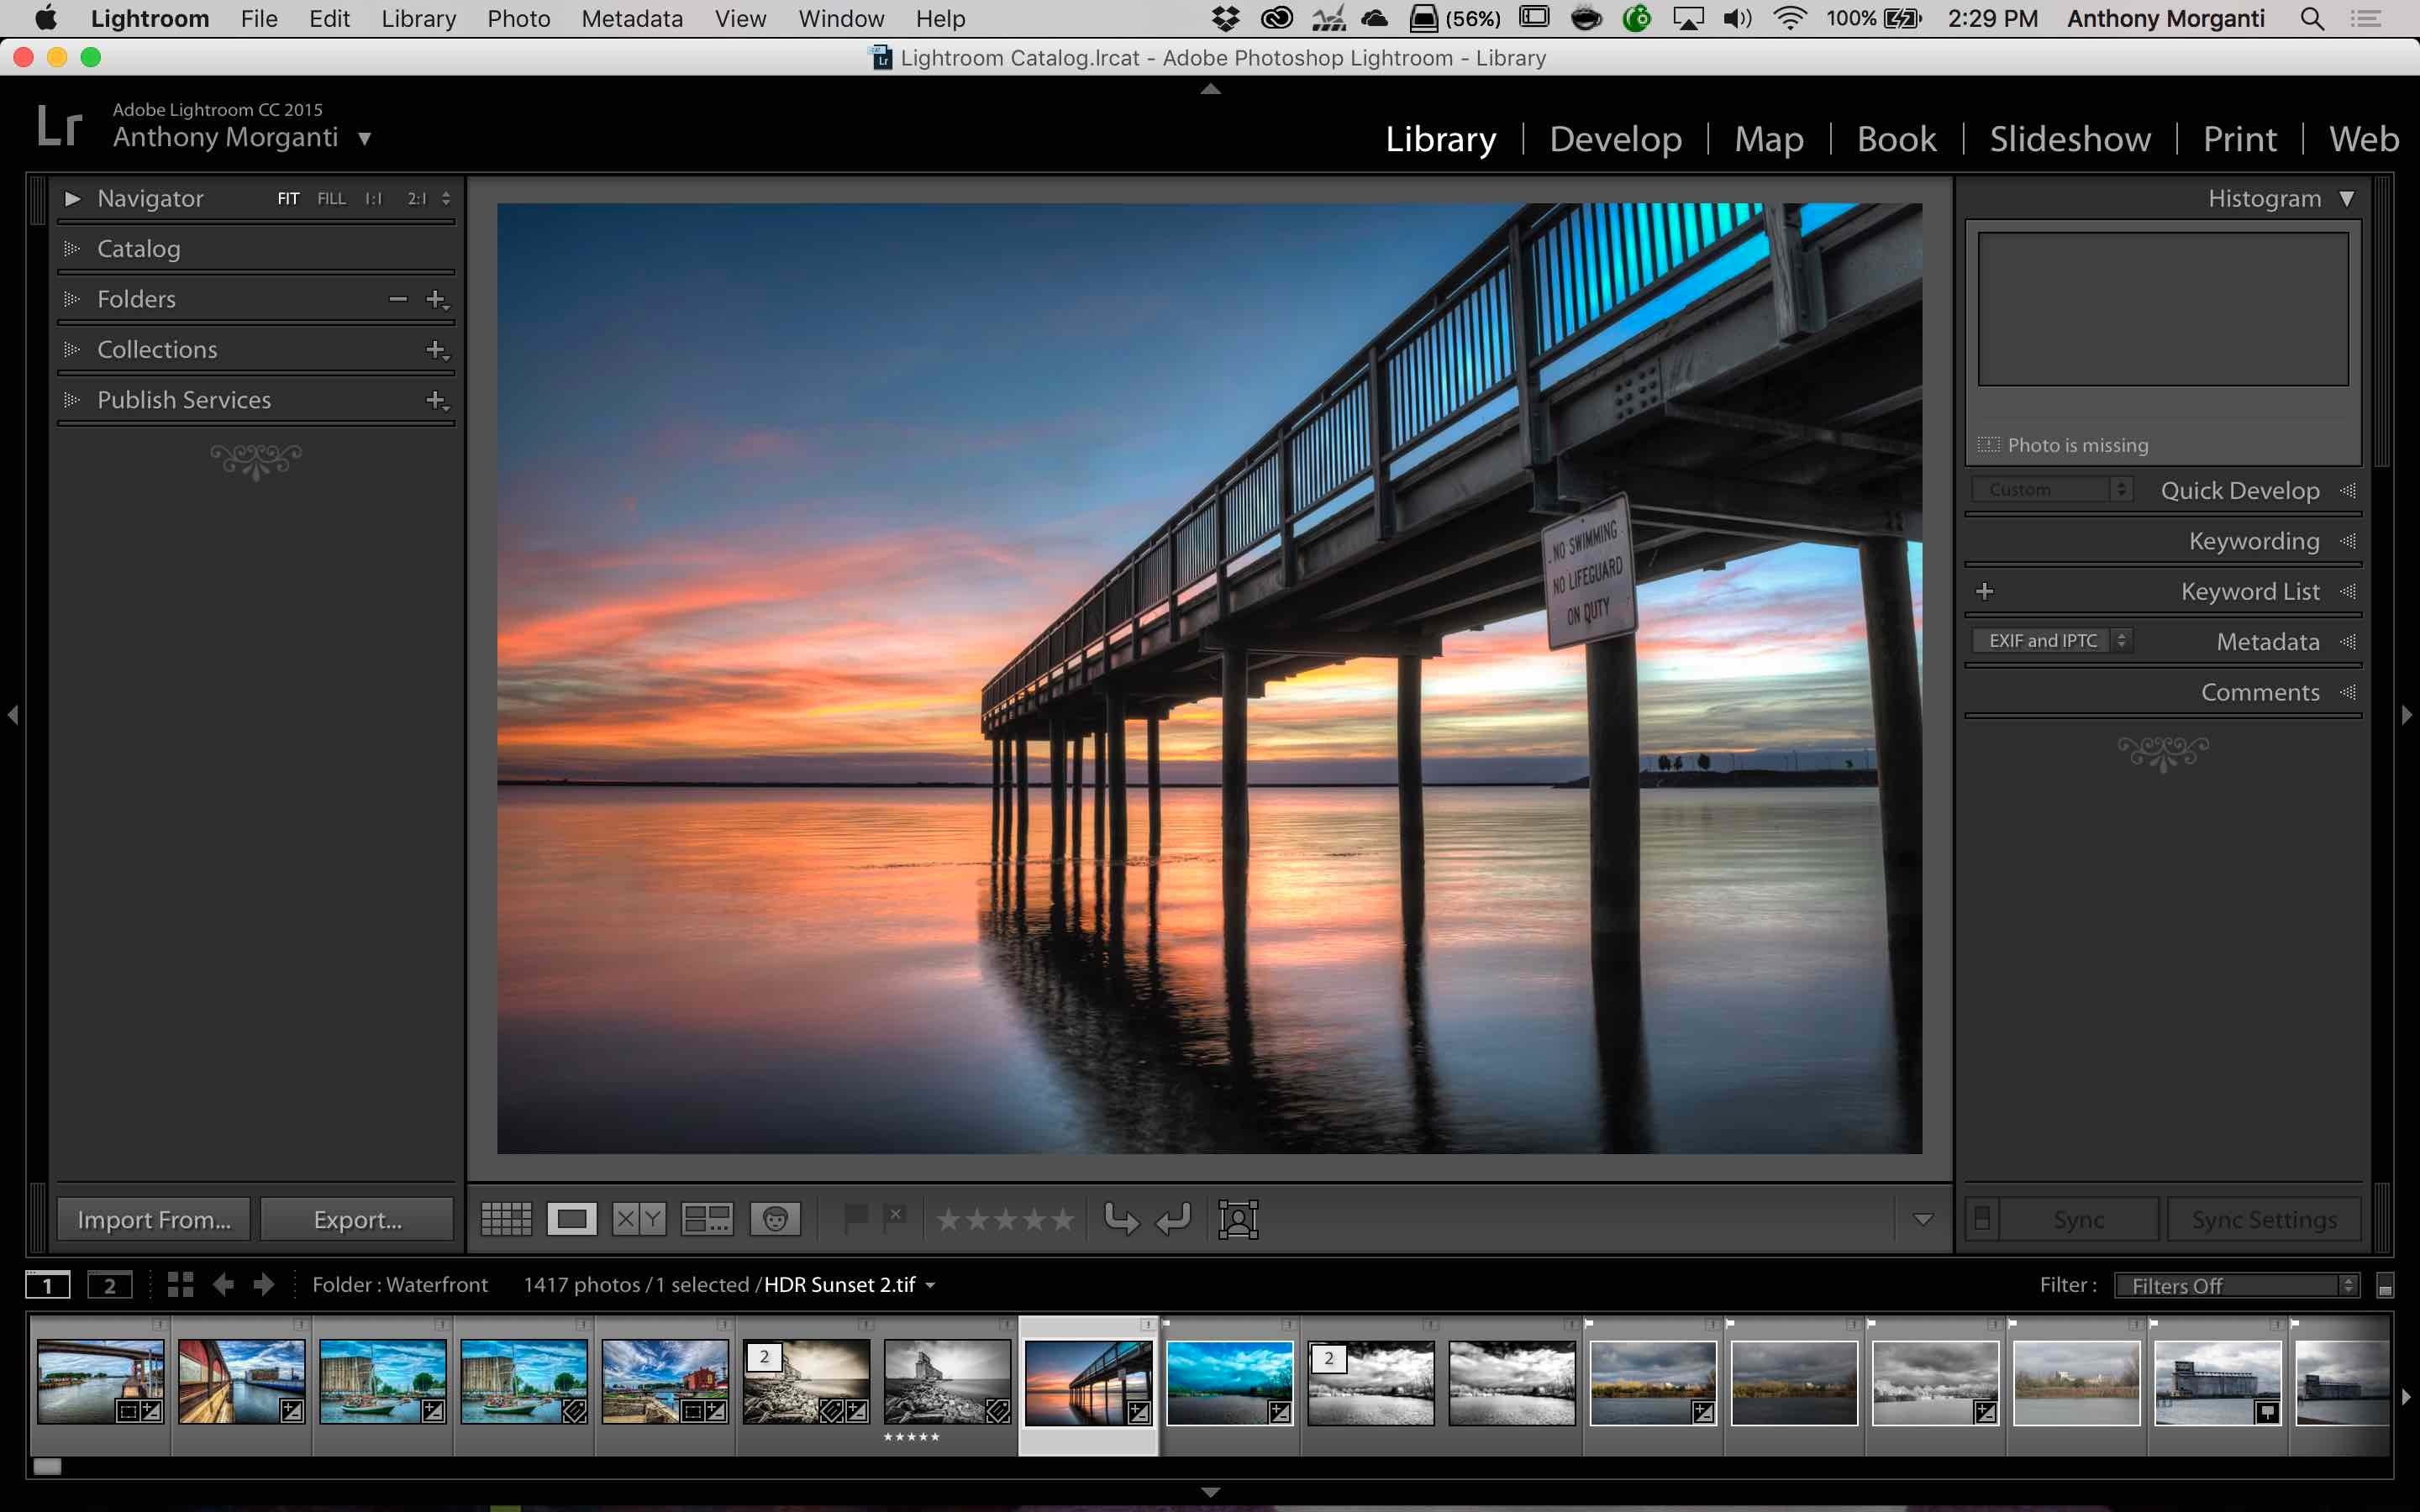 Adobe Photoshop Lightroom CC v4.1 [Unlocked] [Latest]